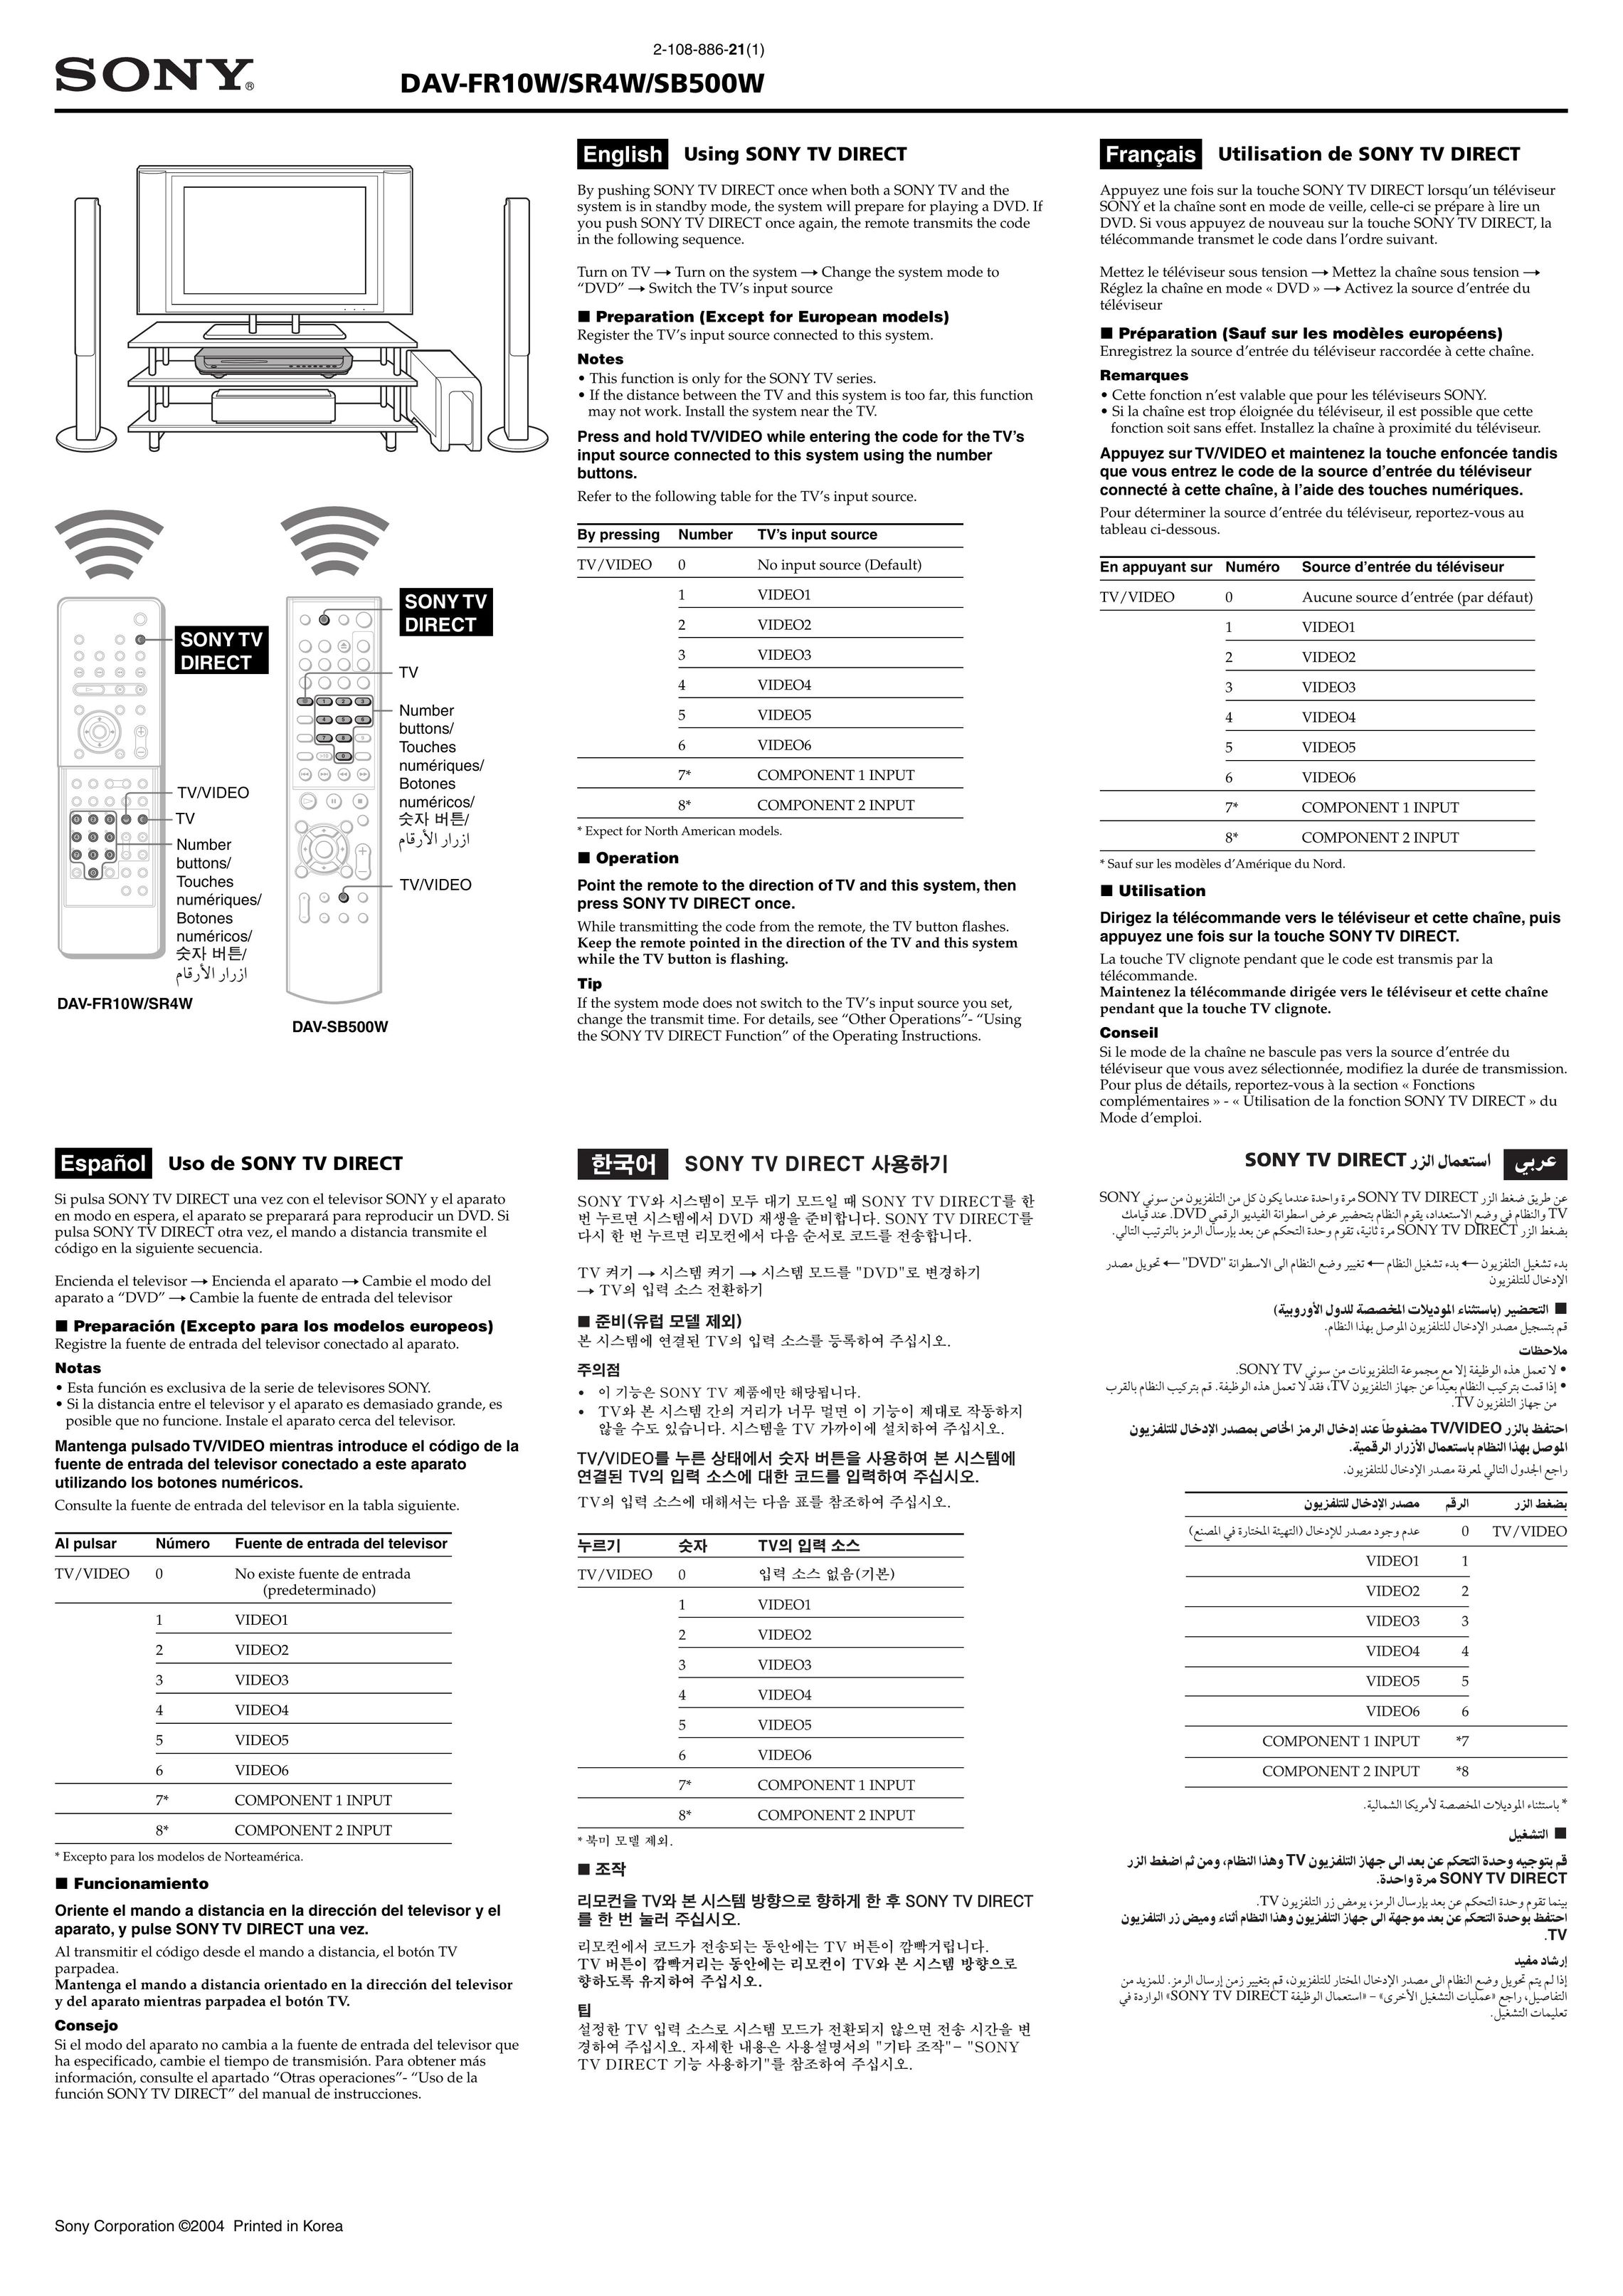 Sony DAV-FR10W Universal Remote User Manual